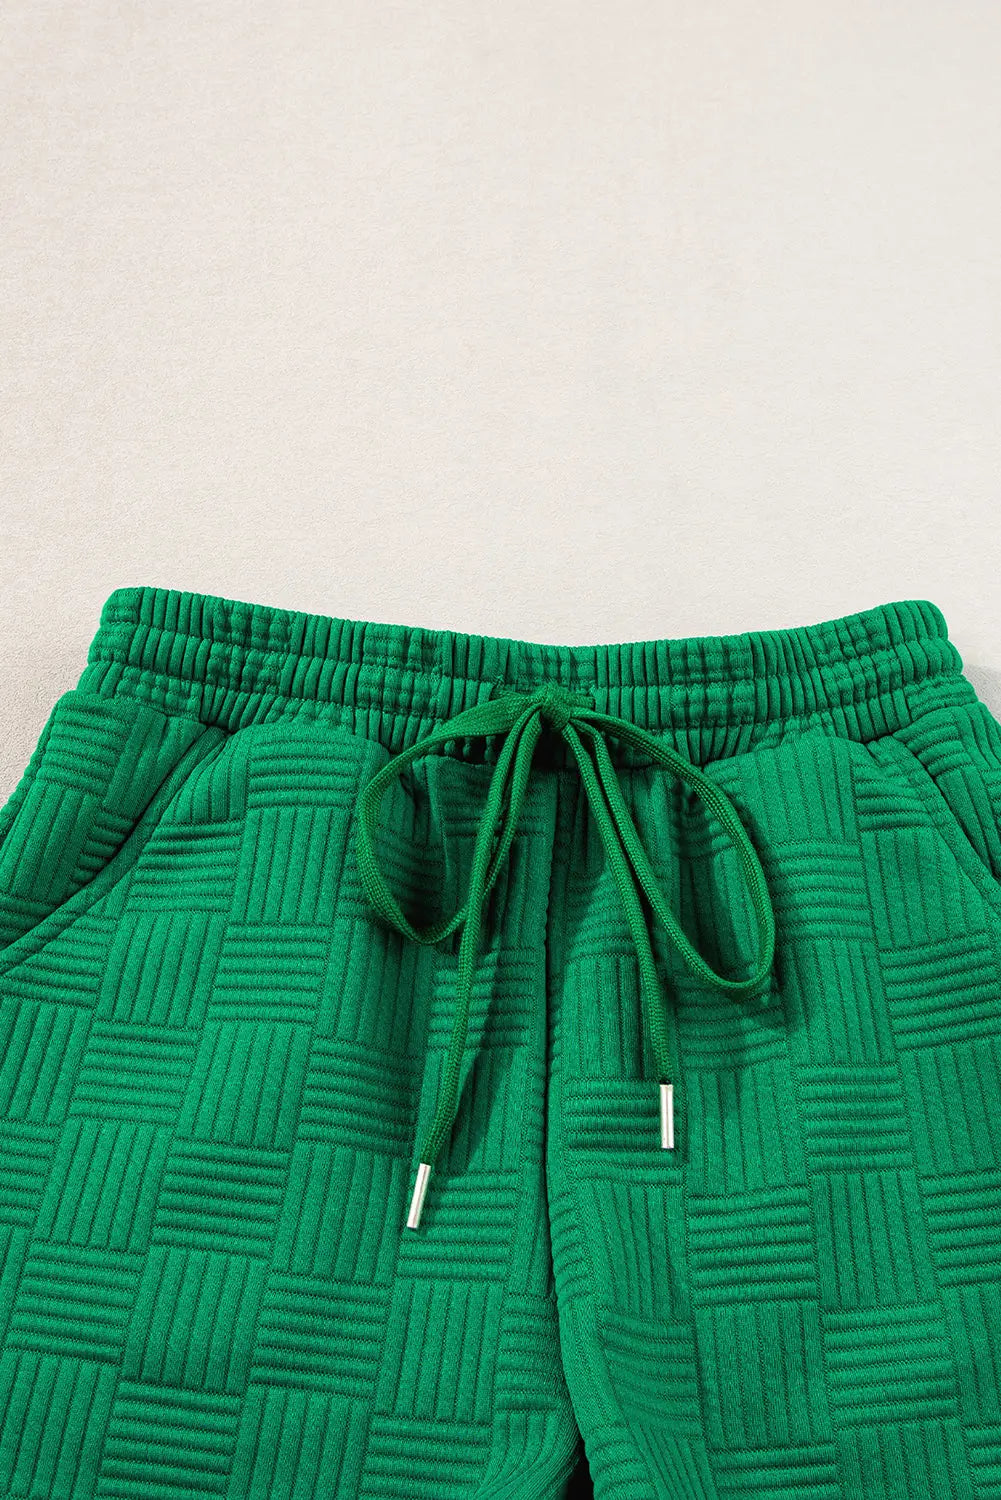 Jade tee and shorts set - two piece sets/short sets